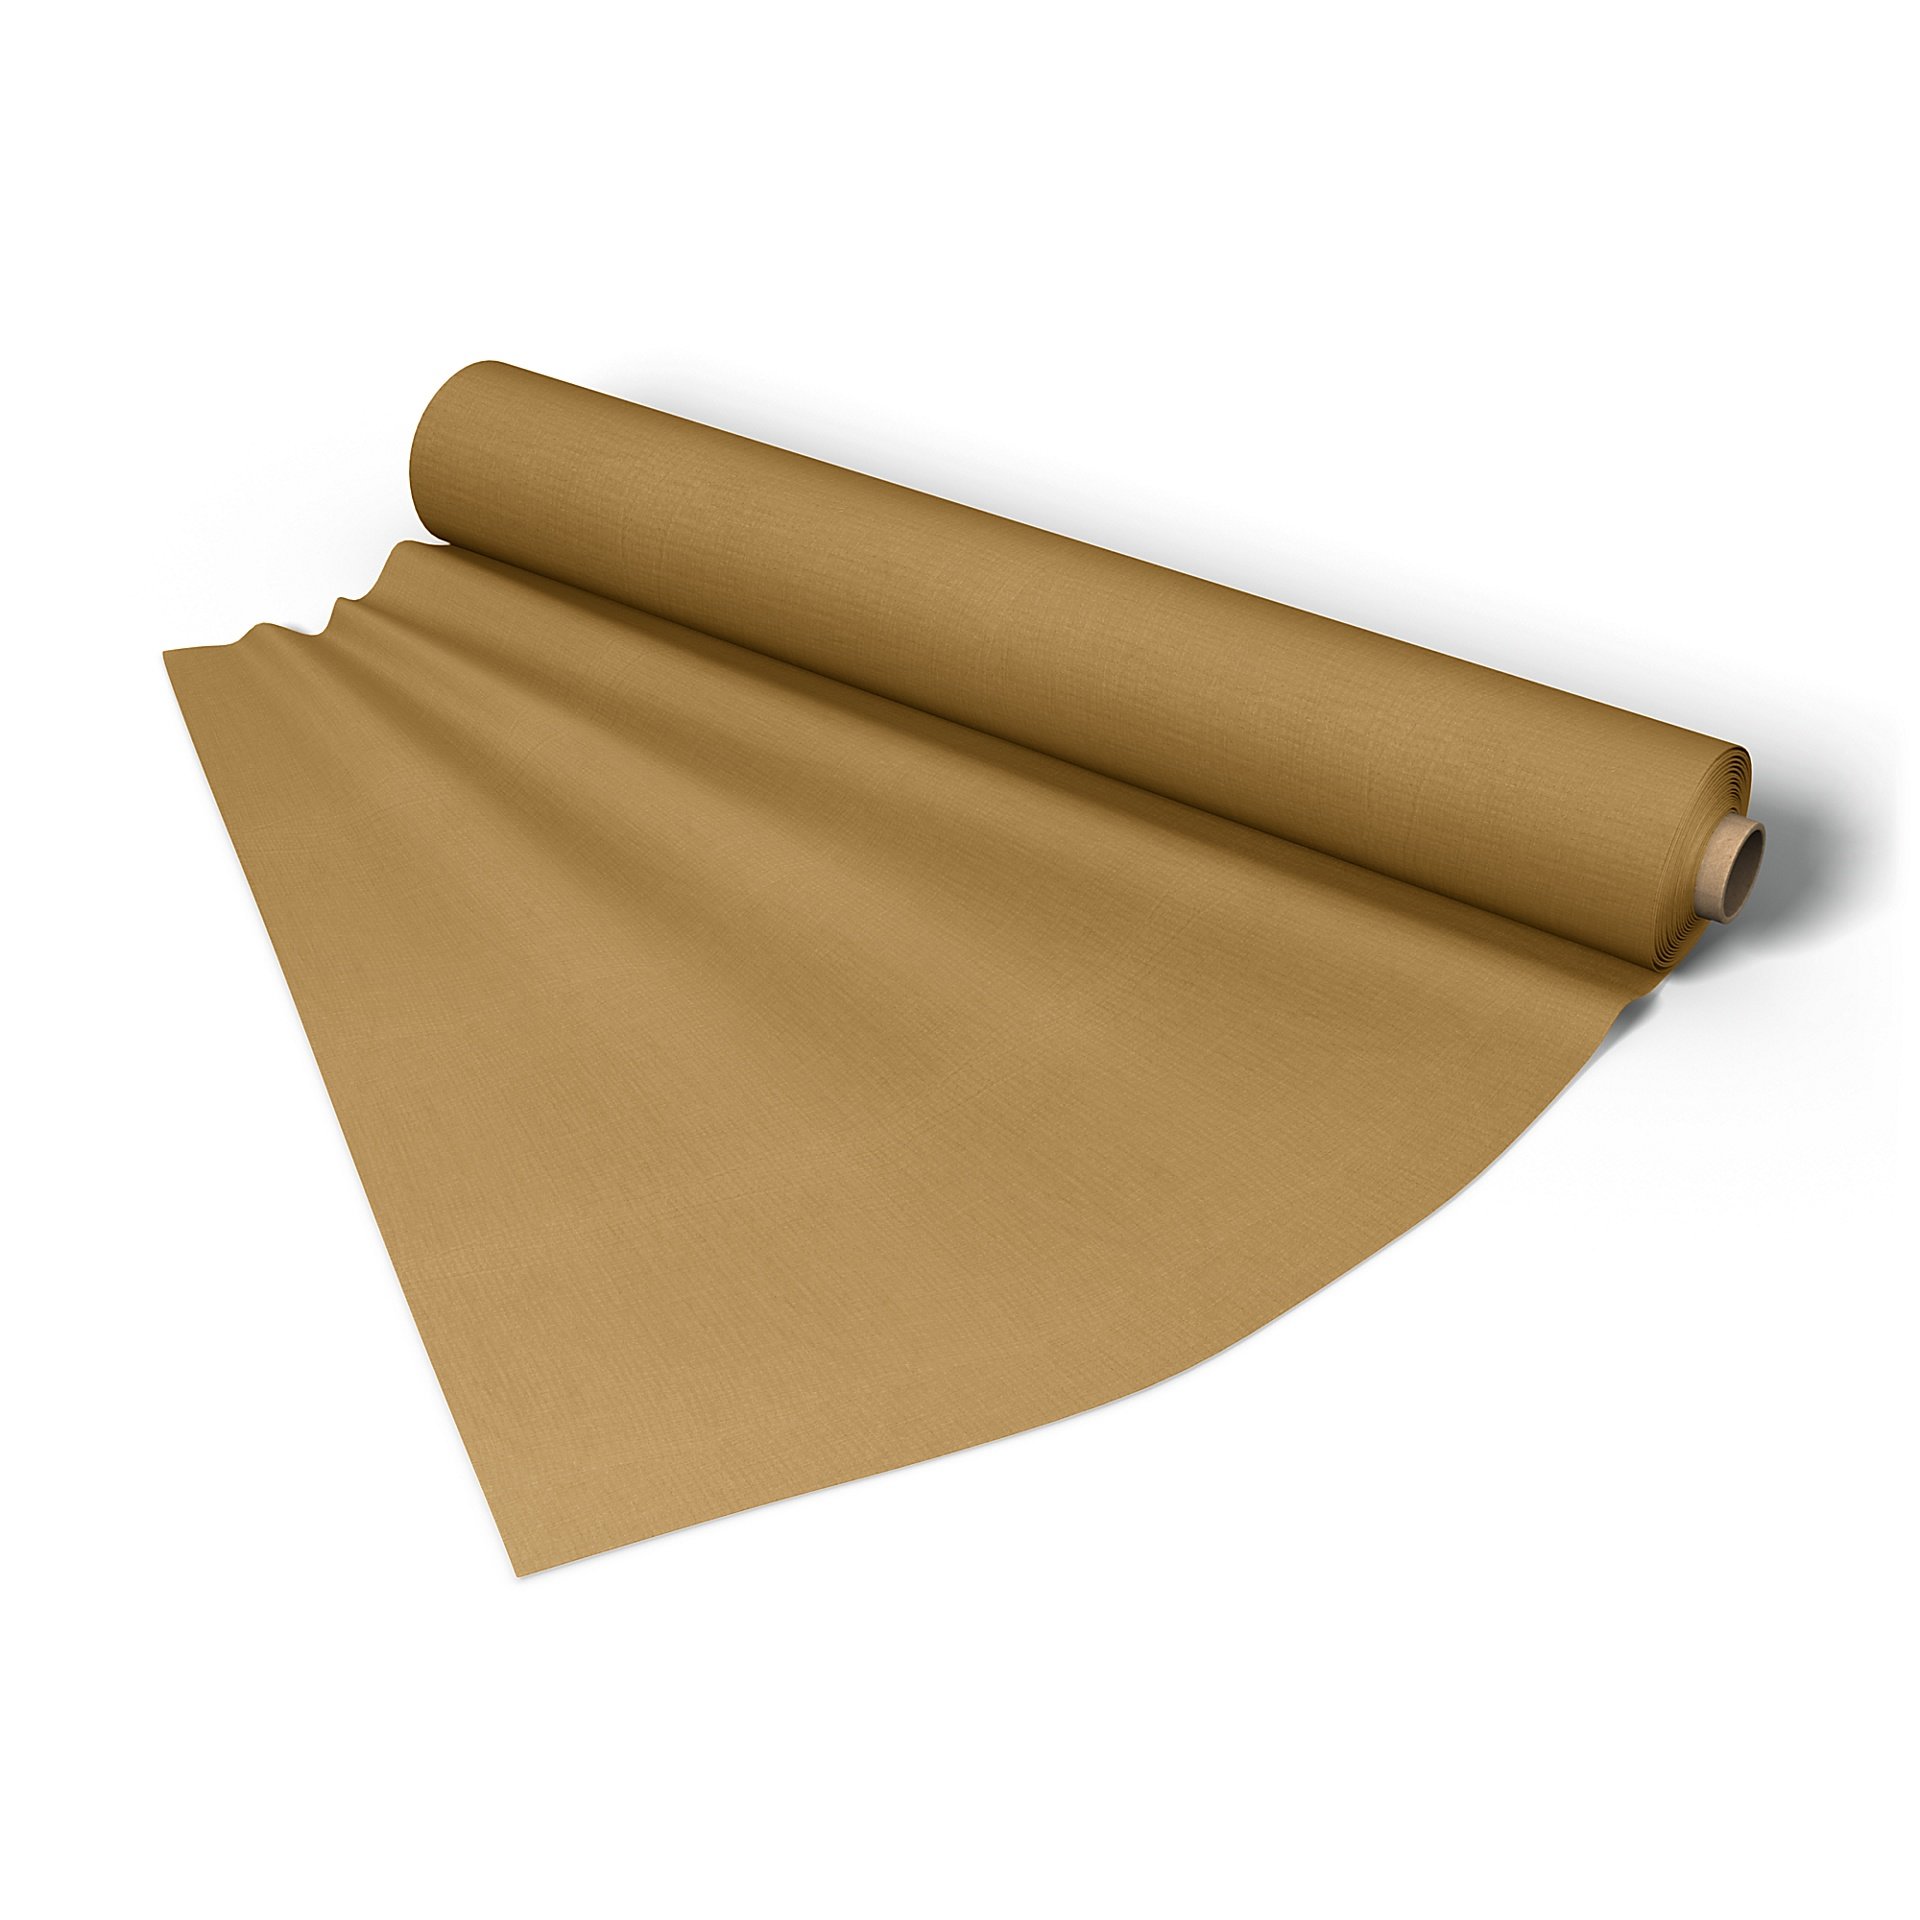 Fabric per metre, Dusty Yellow, Linen - Bemz